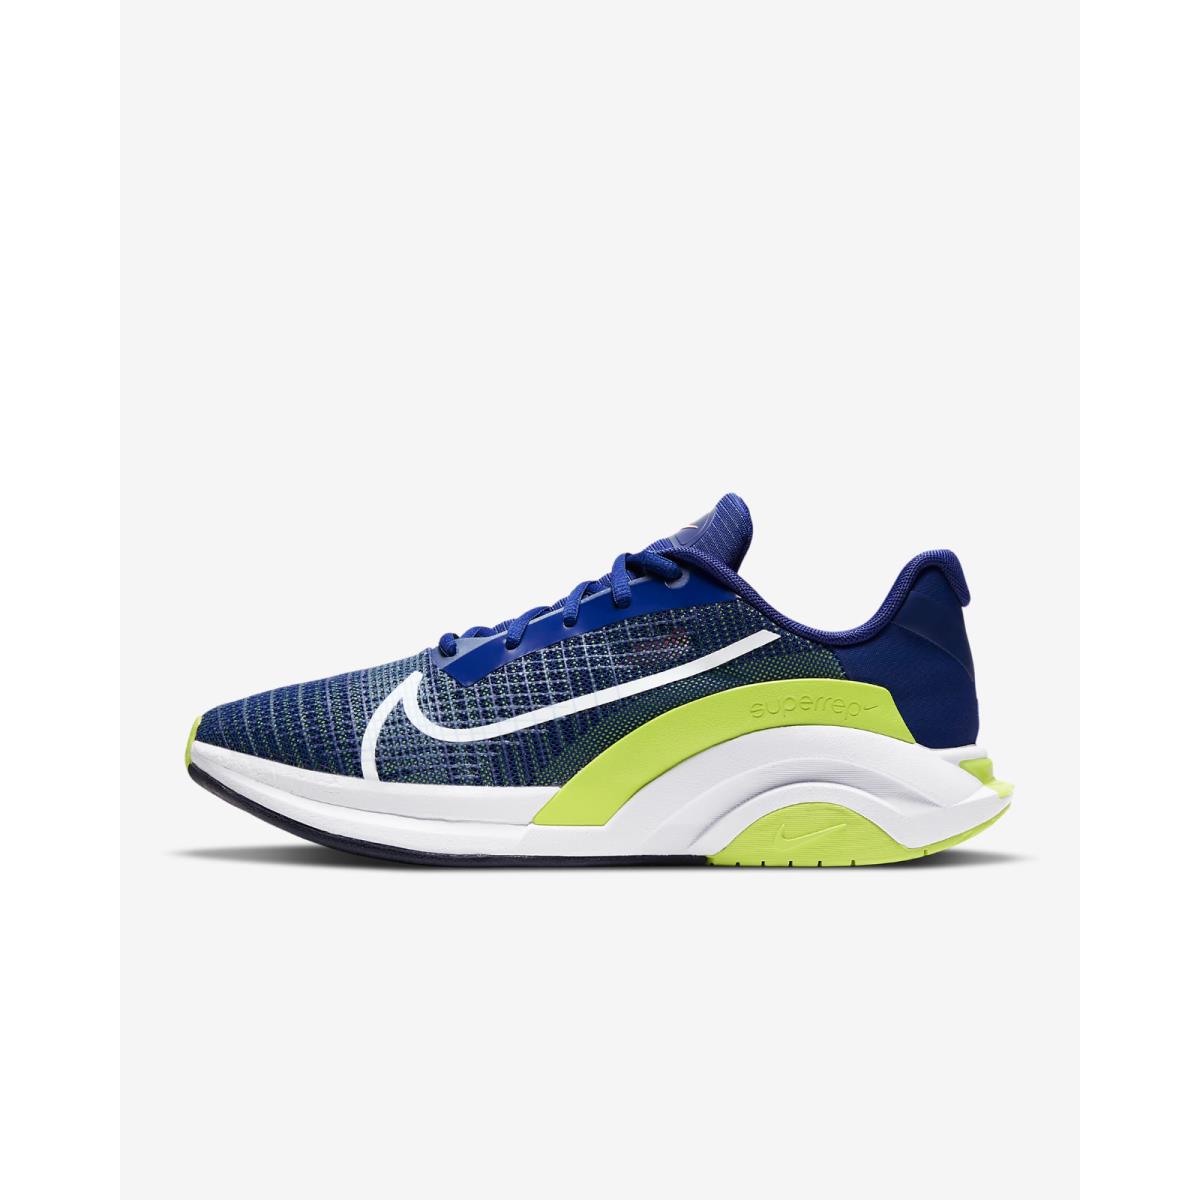 Nike shoes ZoomX SuperRep Surge - Deep Royal Blue/Cyber/Bright Mango/White 2